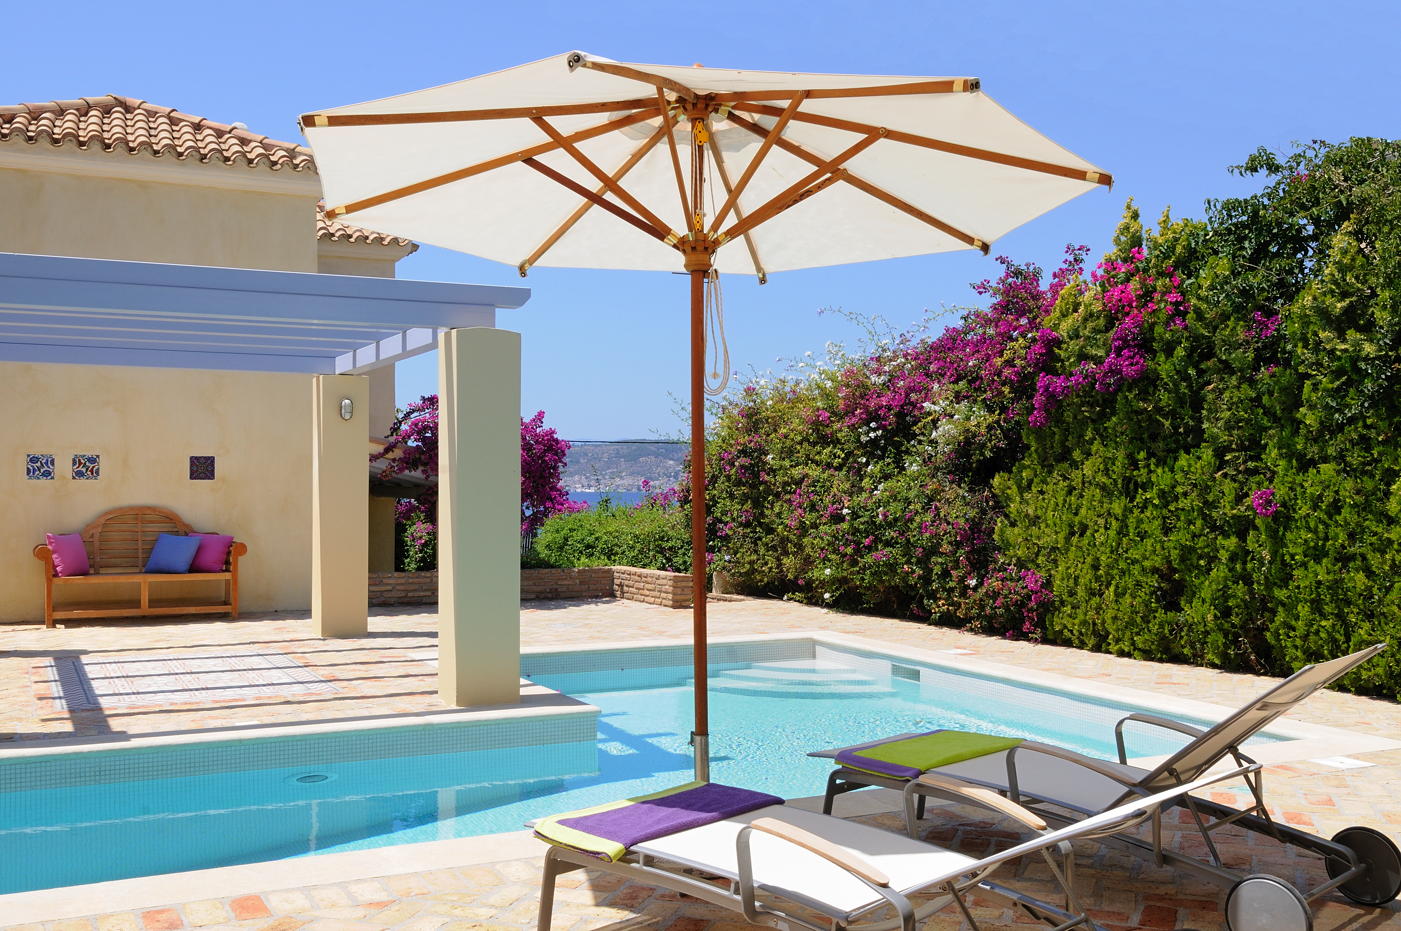 rental villa-holiday rental-vacation villa in Greece-with pool-Porto Heli